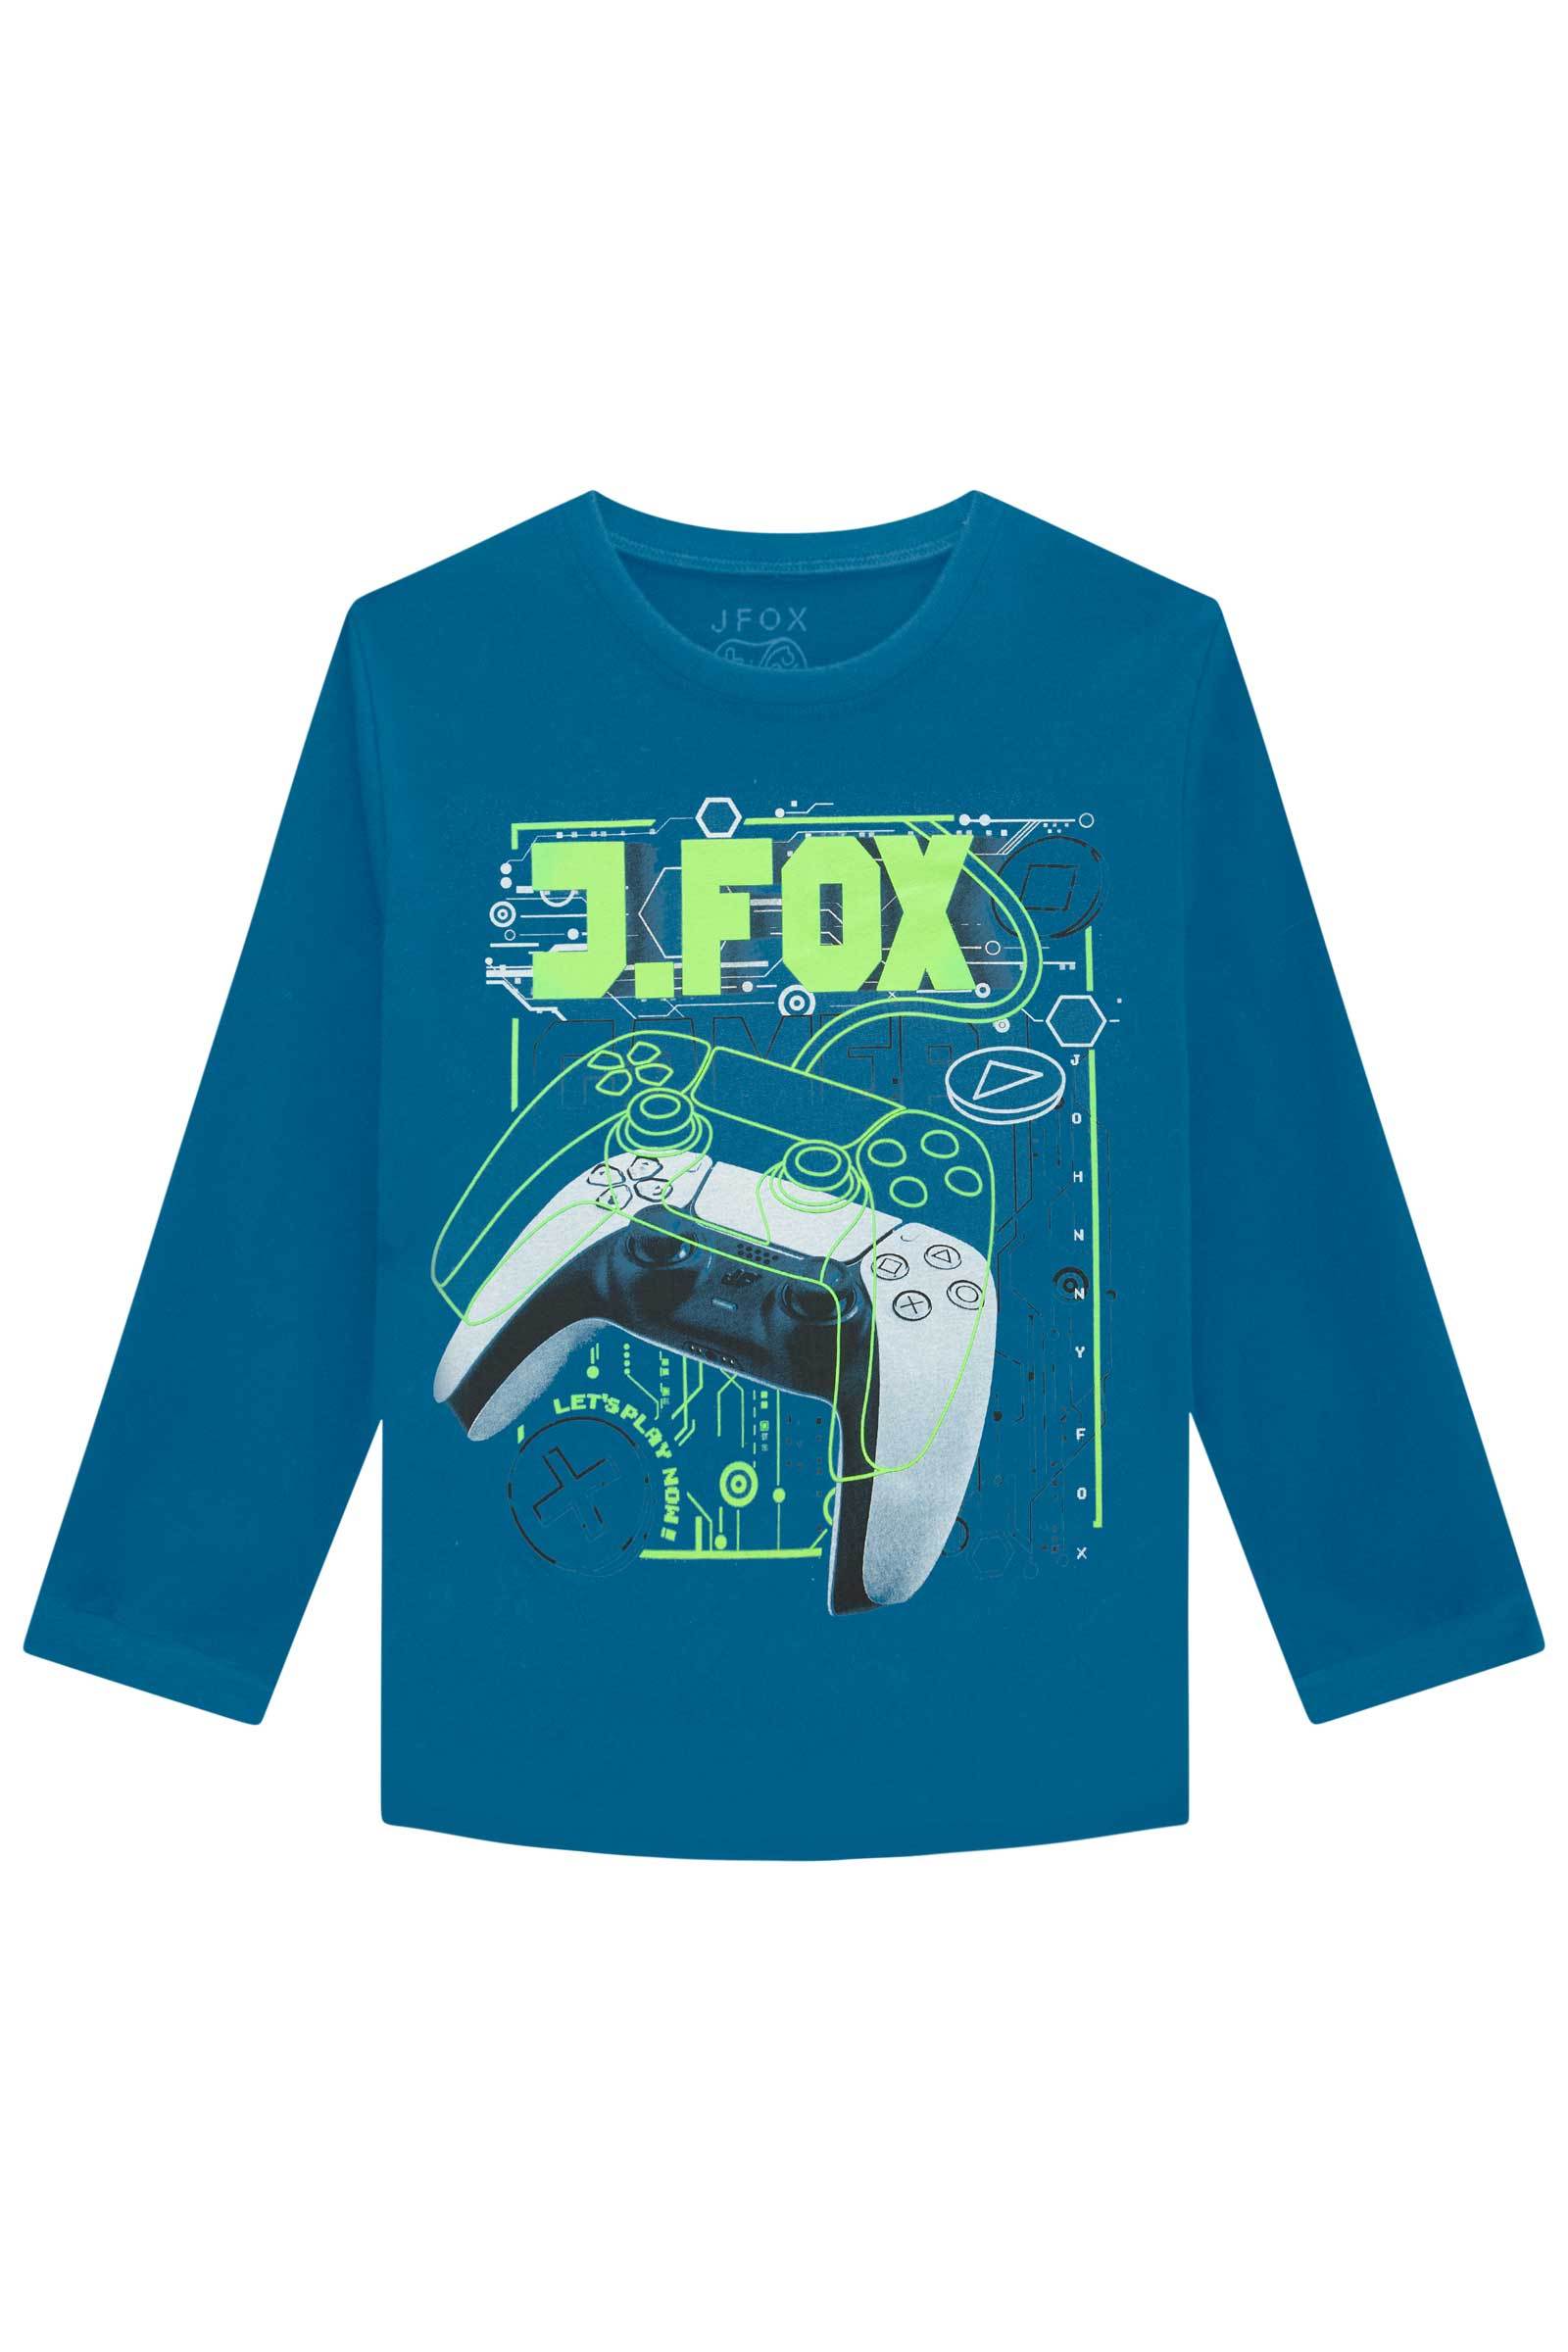 Camiseta em Meia Malha 70440 Johnny Fox